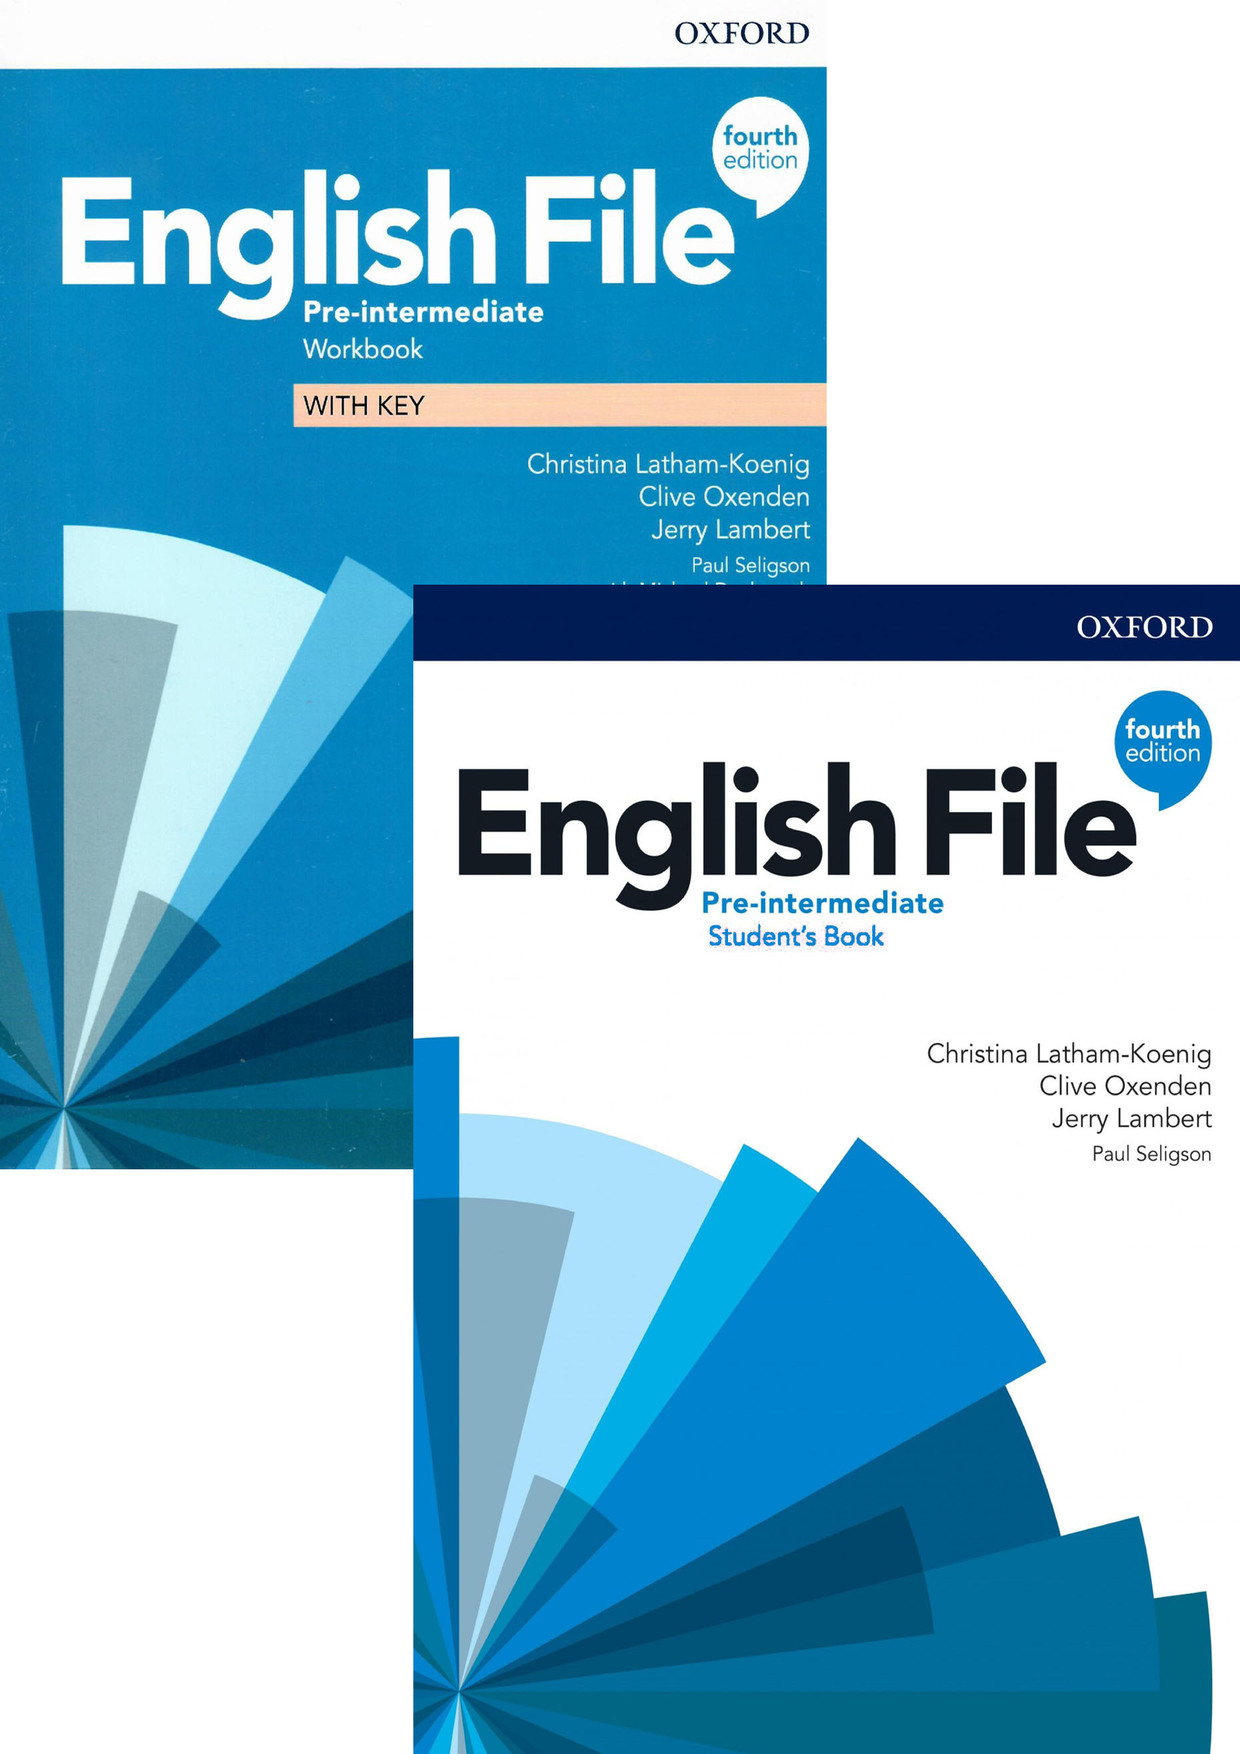 Elementary 4 edition. EF pre Intermediate 4th Edition. English file Elementary 4th Edition уровень. English file pre Intermediate 4th Edition. English file Intermediate 4th Edition.